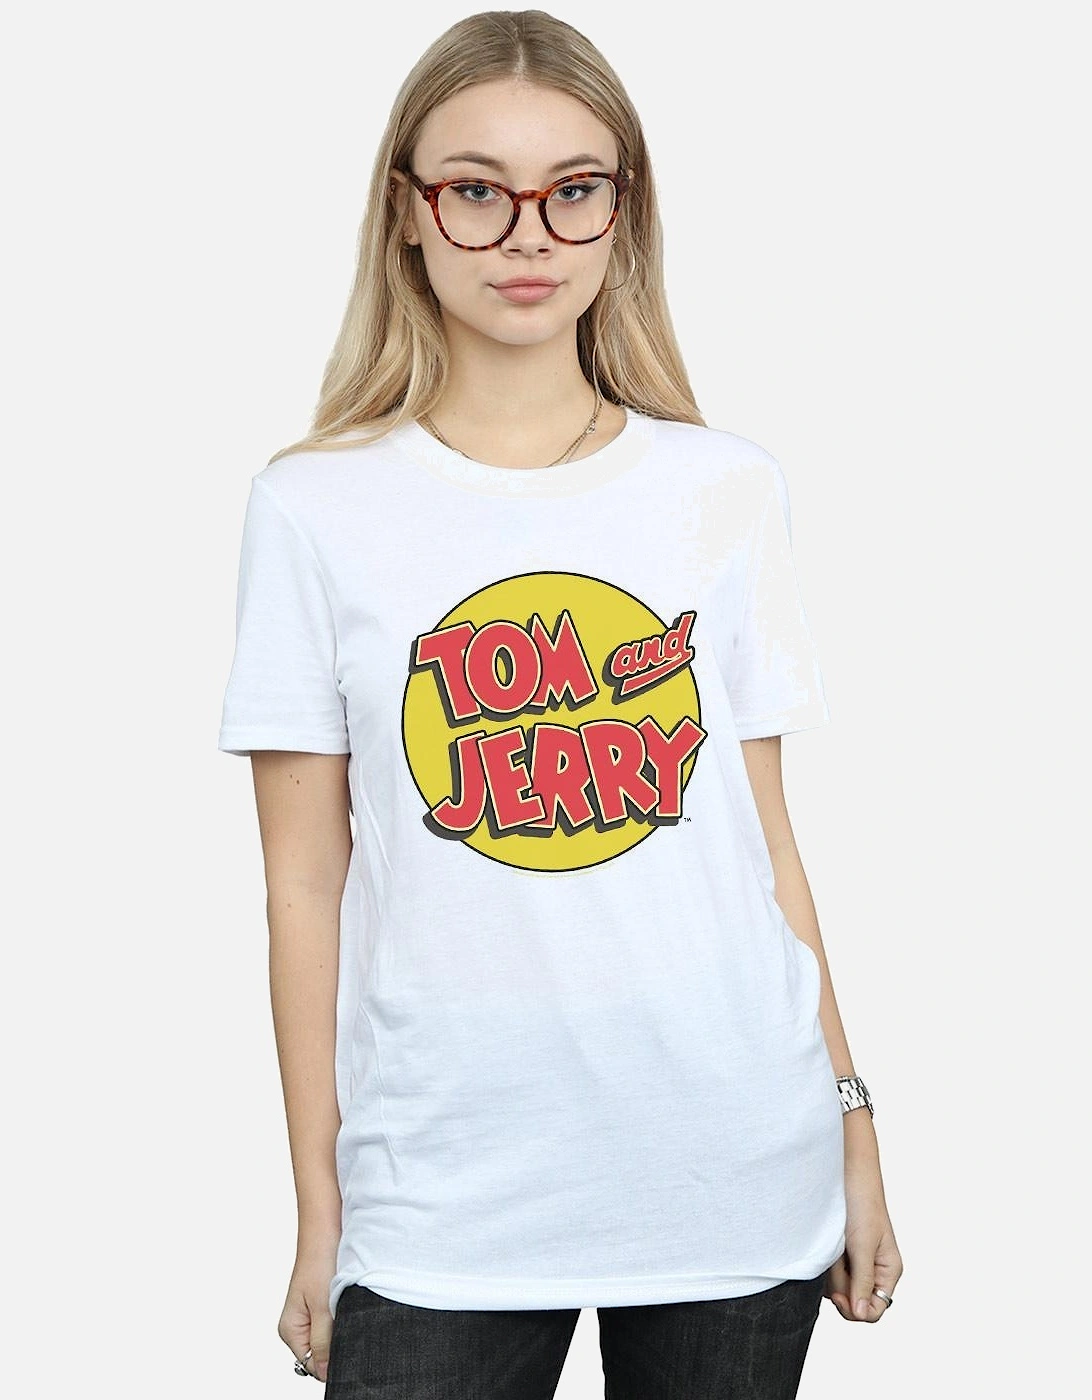 Tom And Jerry Womens/Ladies Circle Logo Cotton Boyfriend T-Shirt